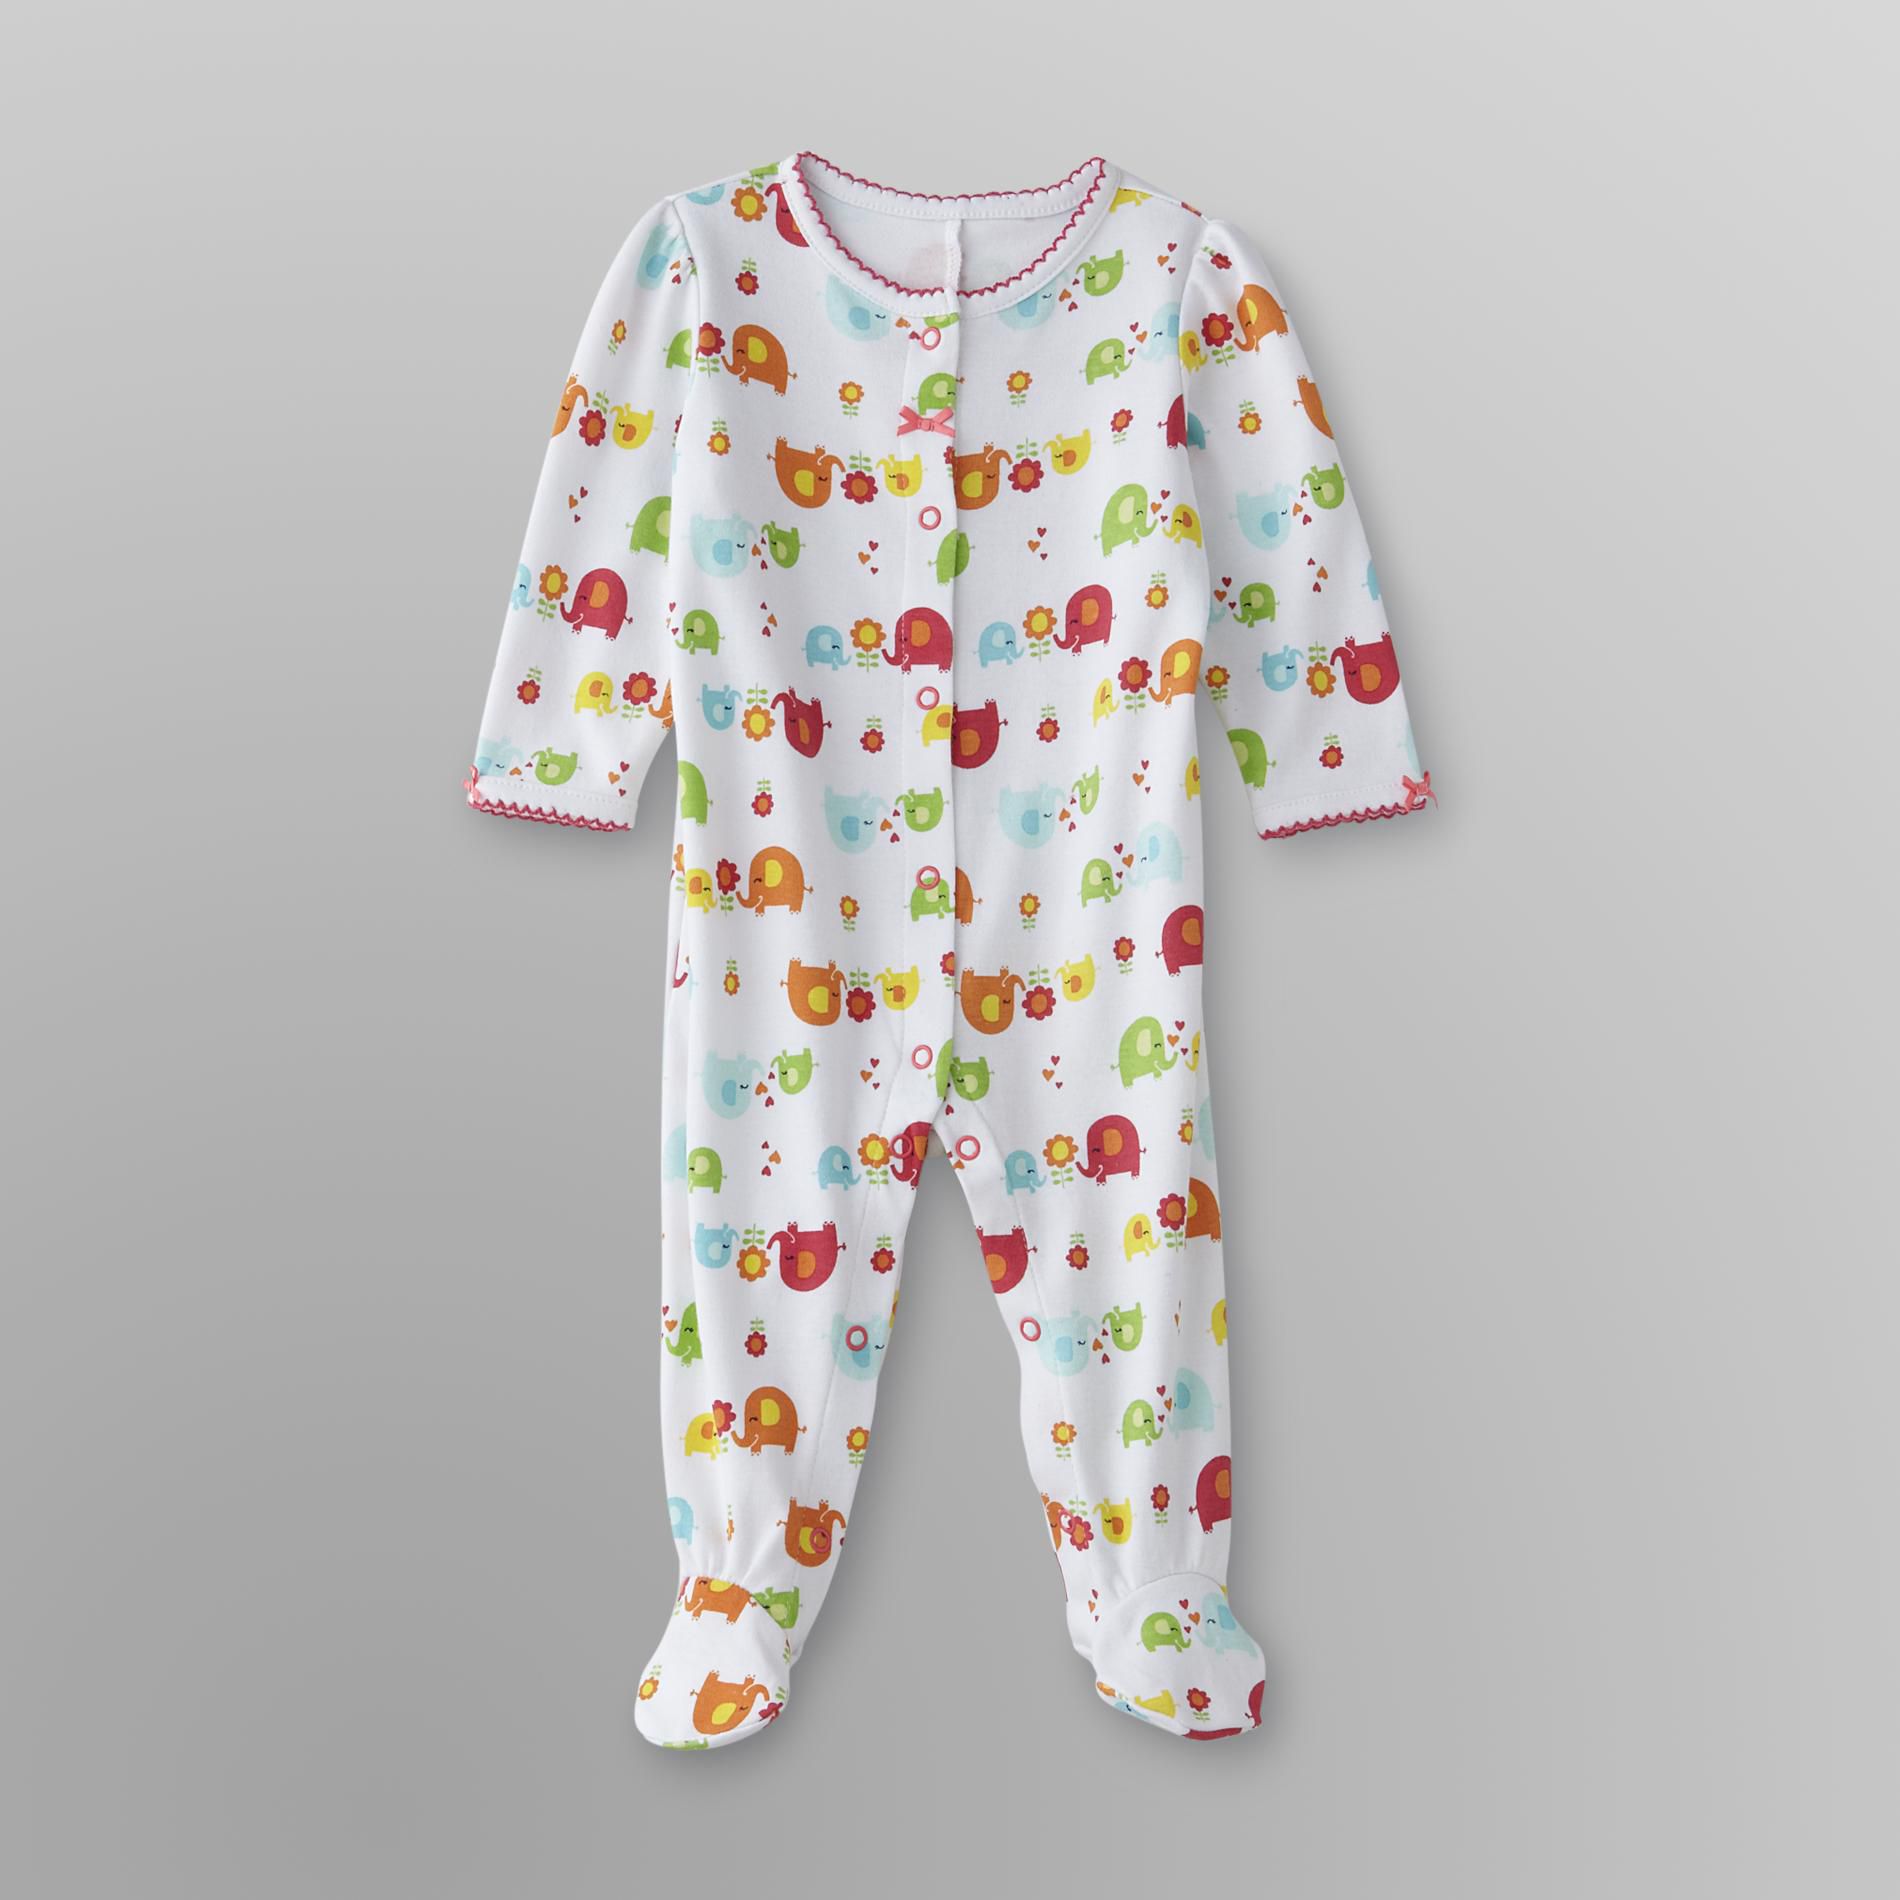 Little Wonders Newborn Girl's Sleeper Pajamas - Elephants